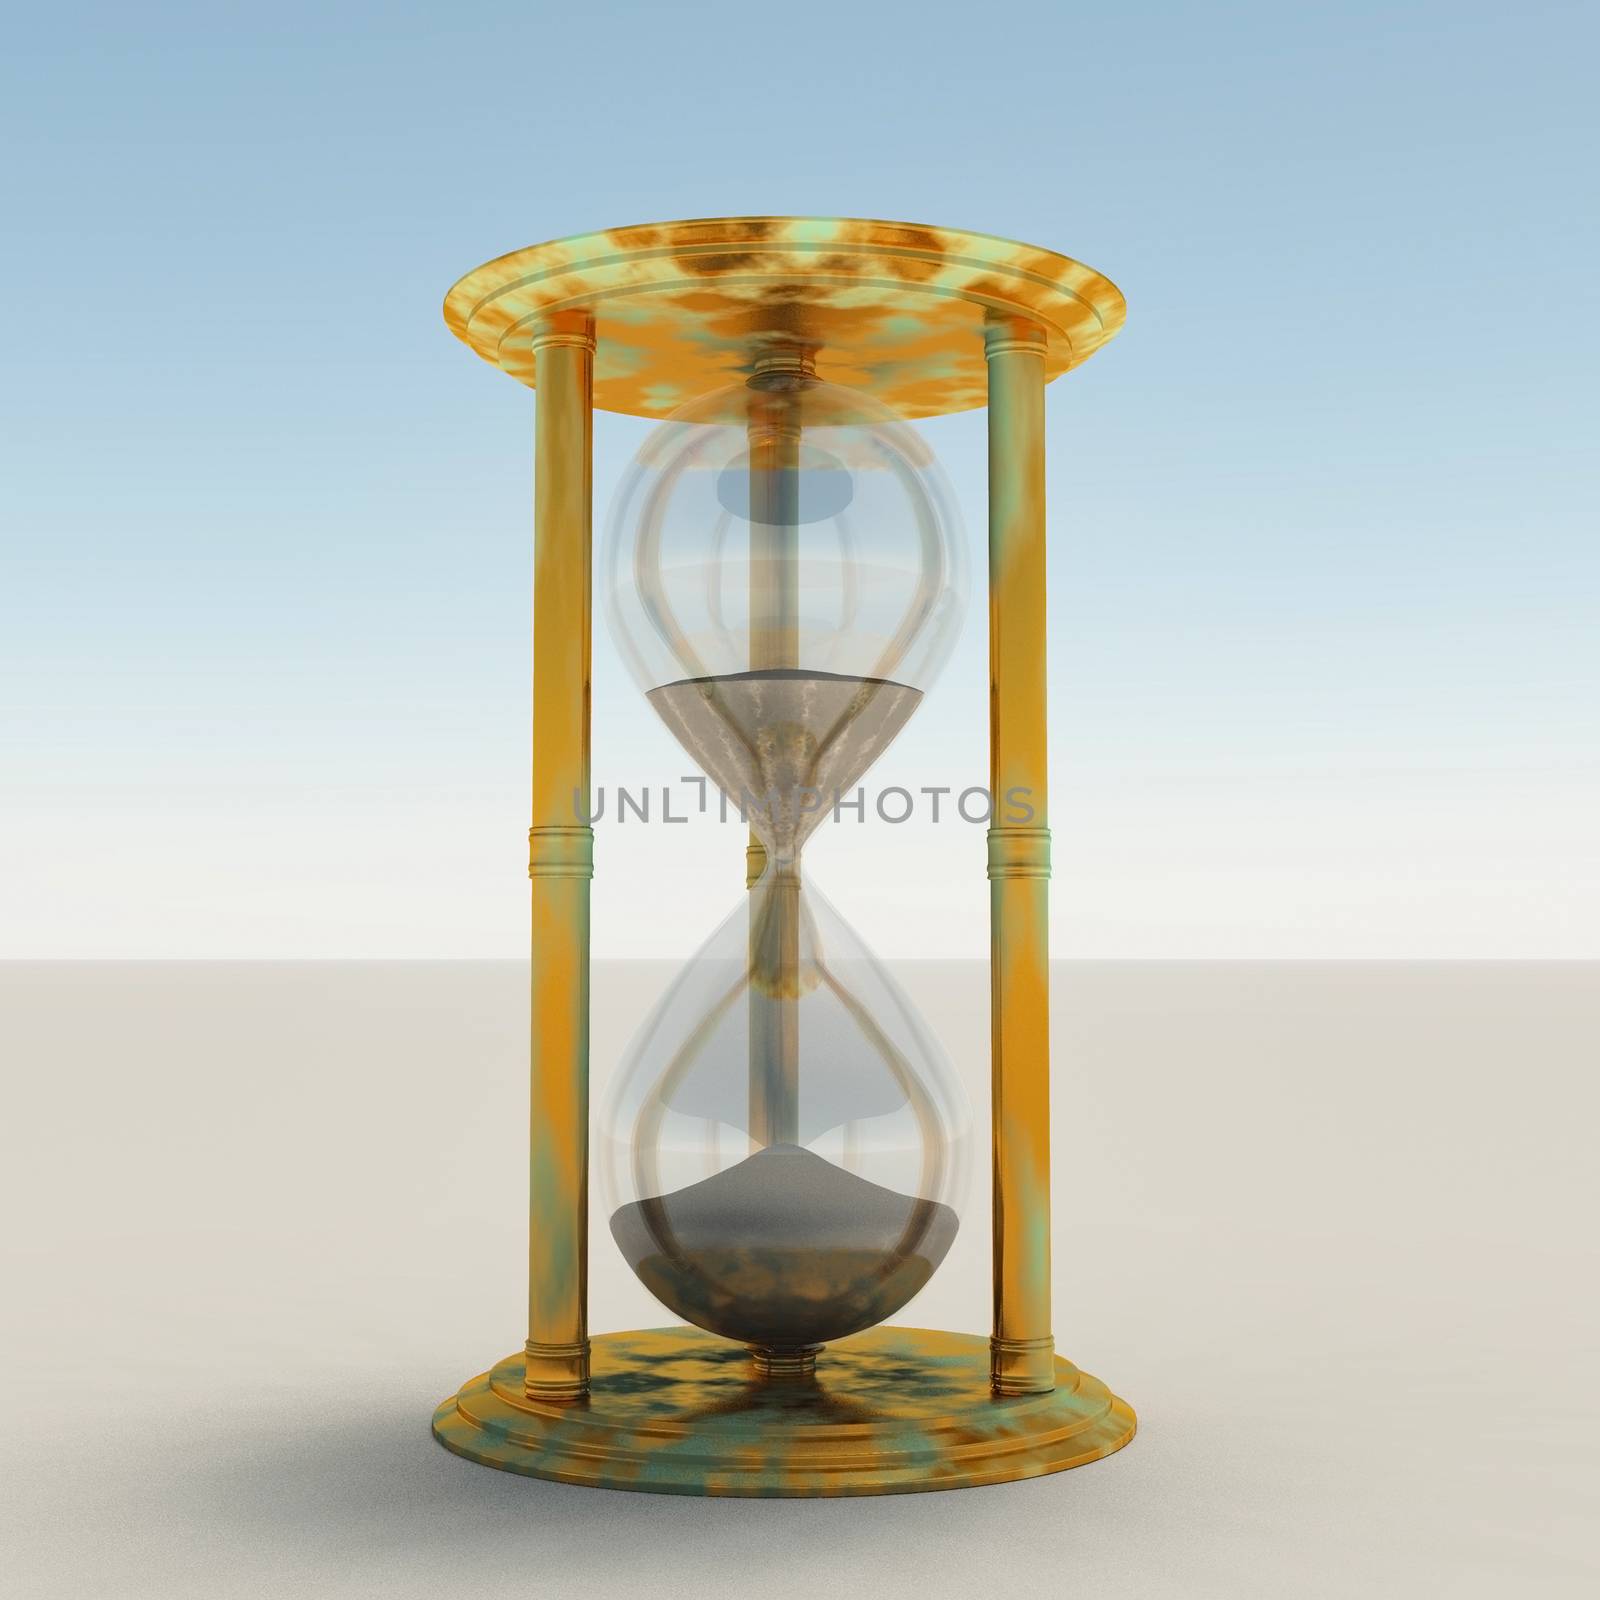 Hourglass by applesstock